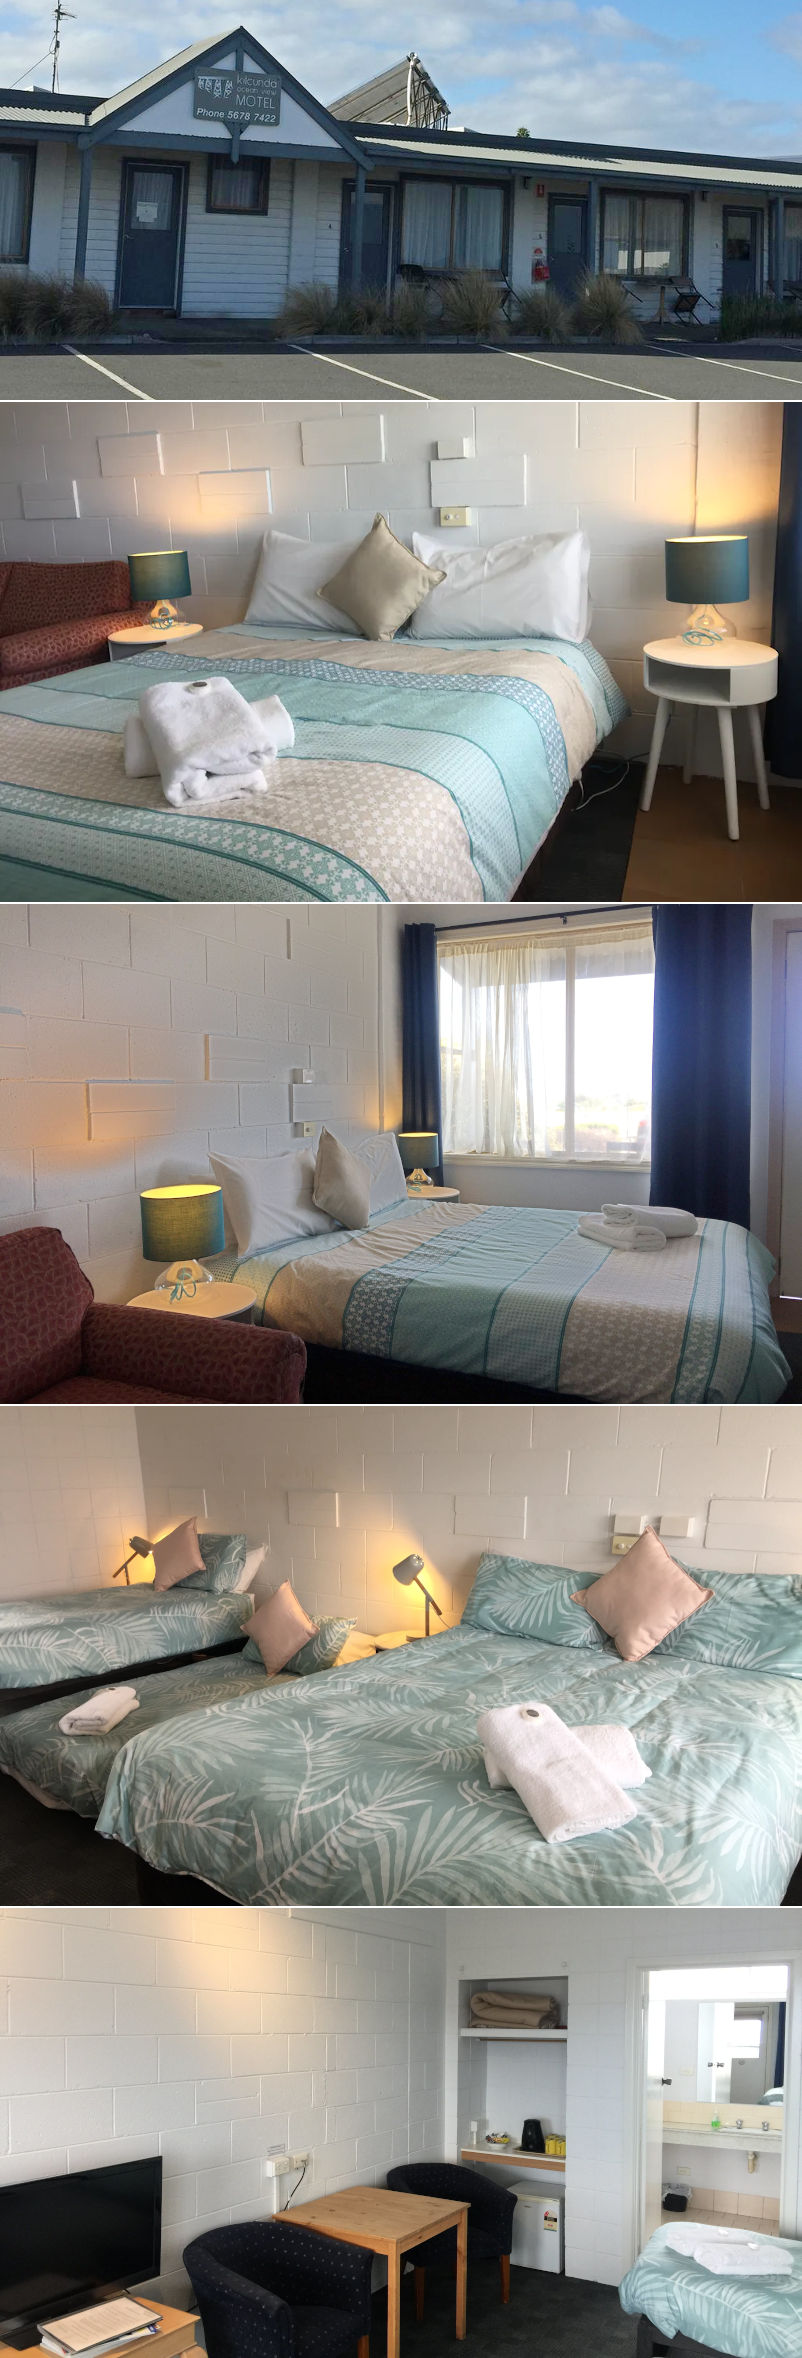 Kilcunda Ocean View Motel - Ocean view rooms